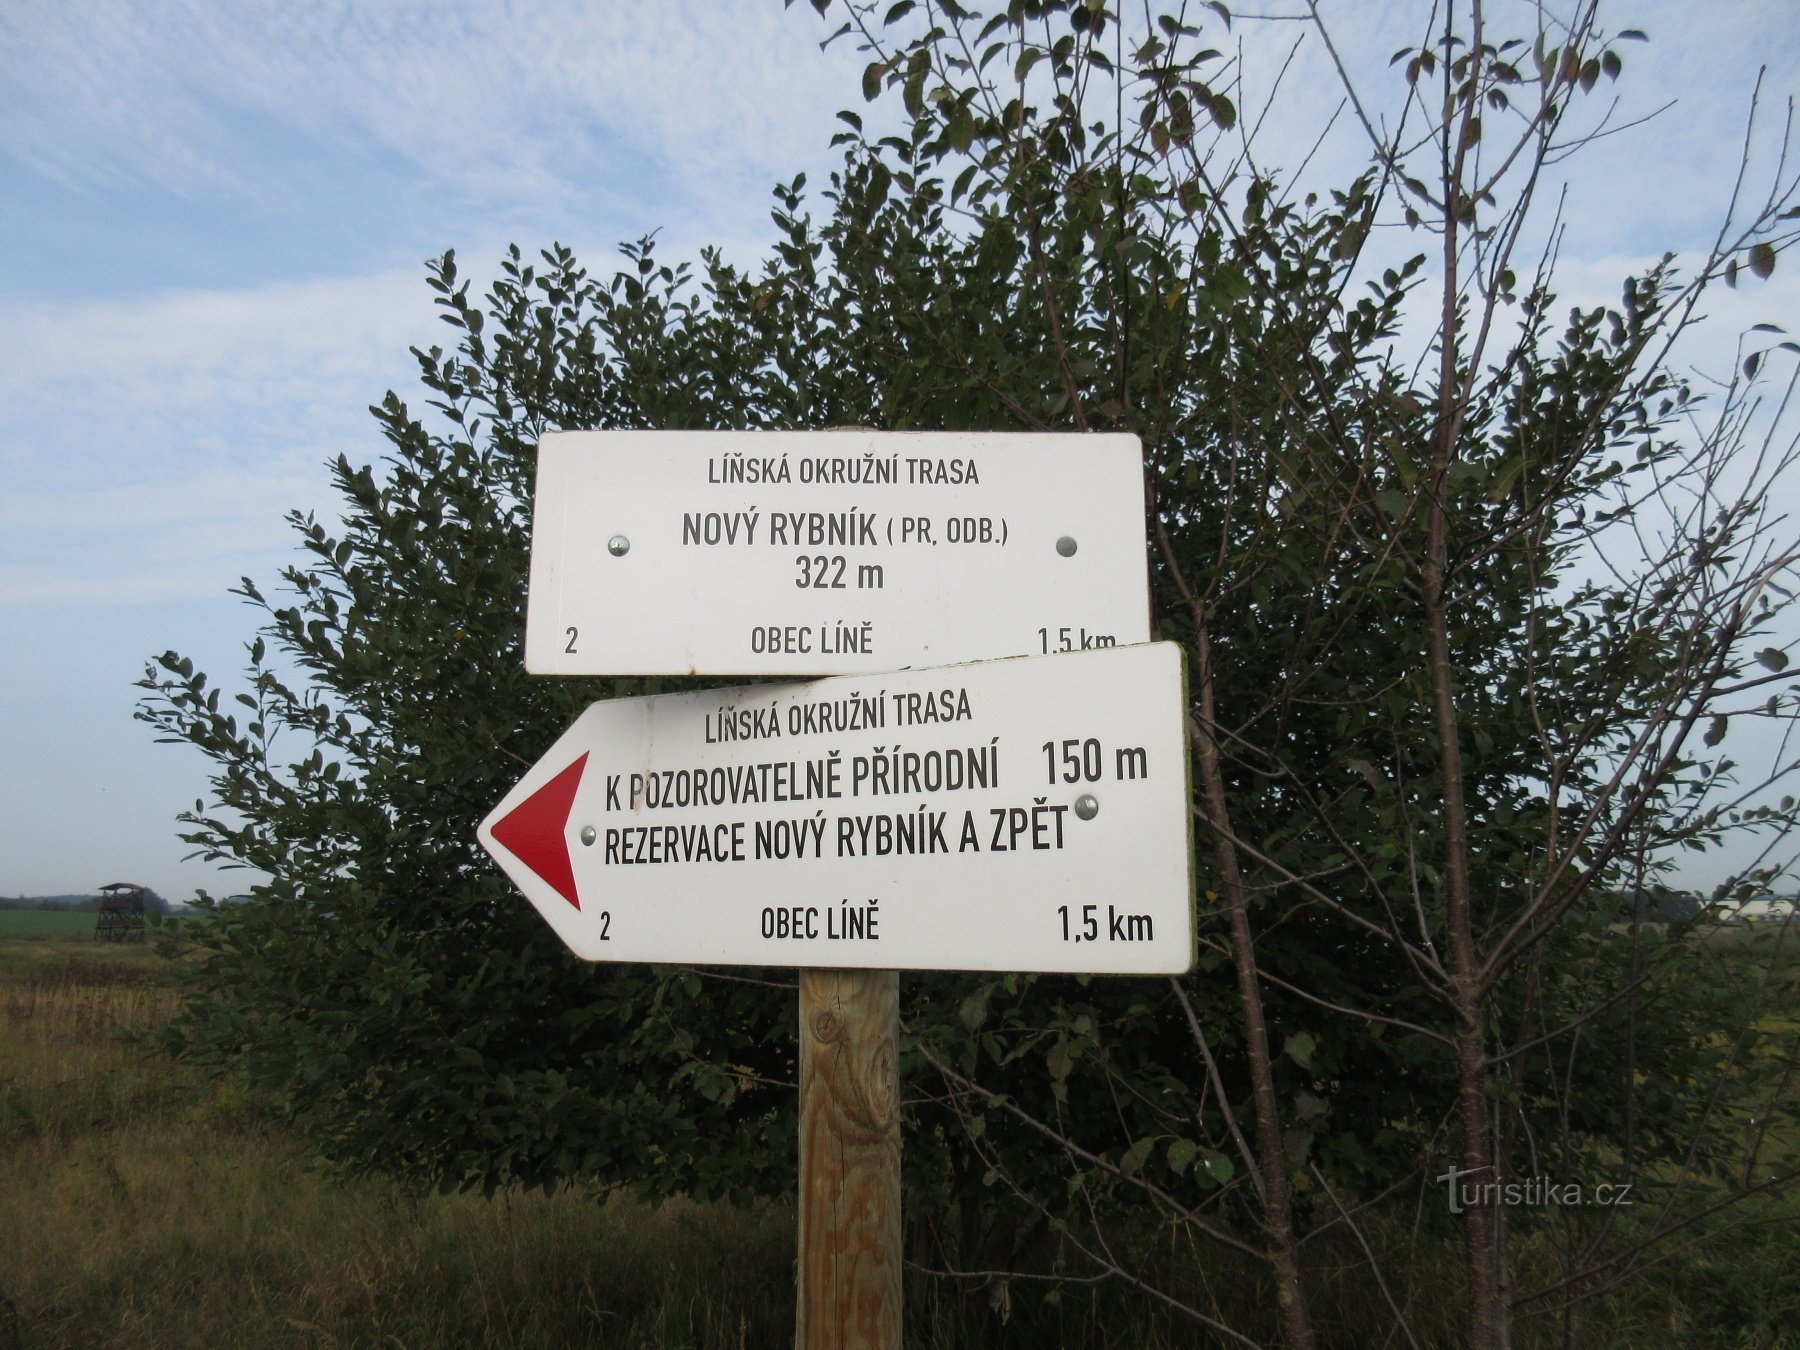 Nový Rybník (Úherce) - naturreservat och fågelobservatorium